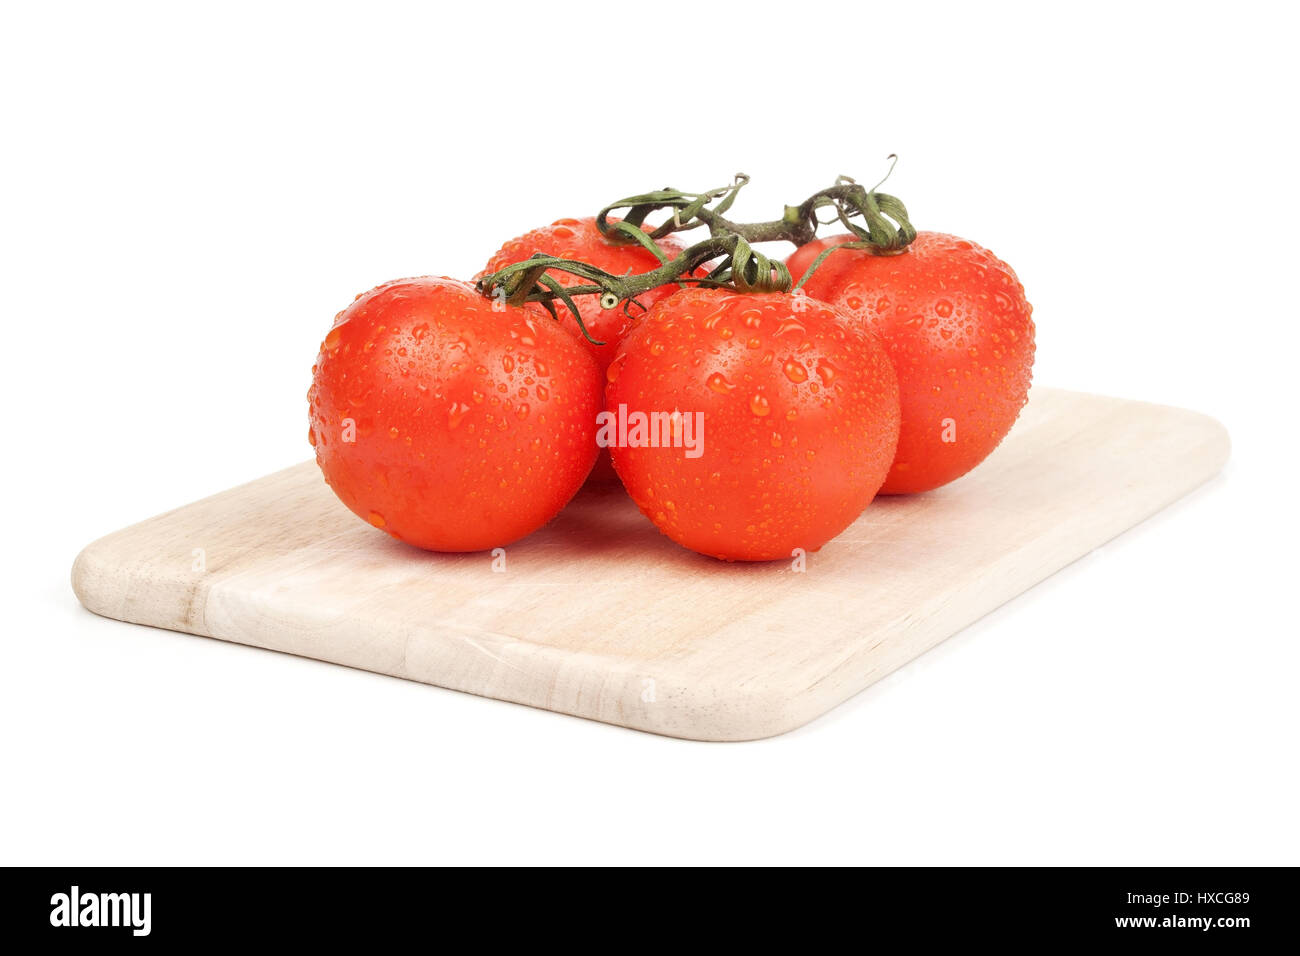 Shrub tomatoes on a wooden board, Tomatoes on a wooden board |, Strauchtomaten auf einem Holzbrett |Tomatoes on a wooden board| Stock Photo